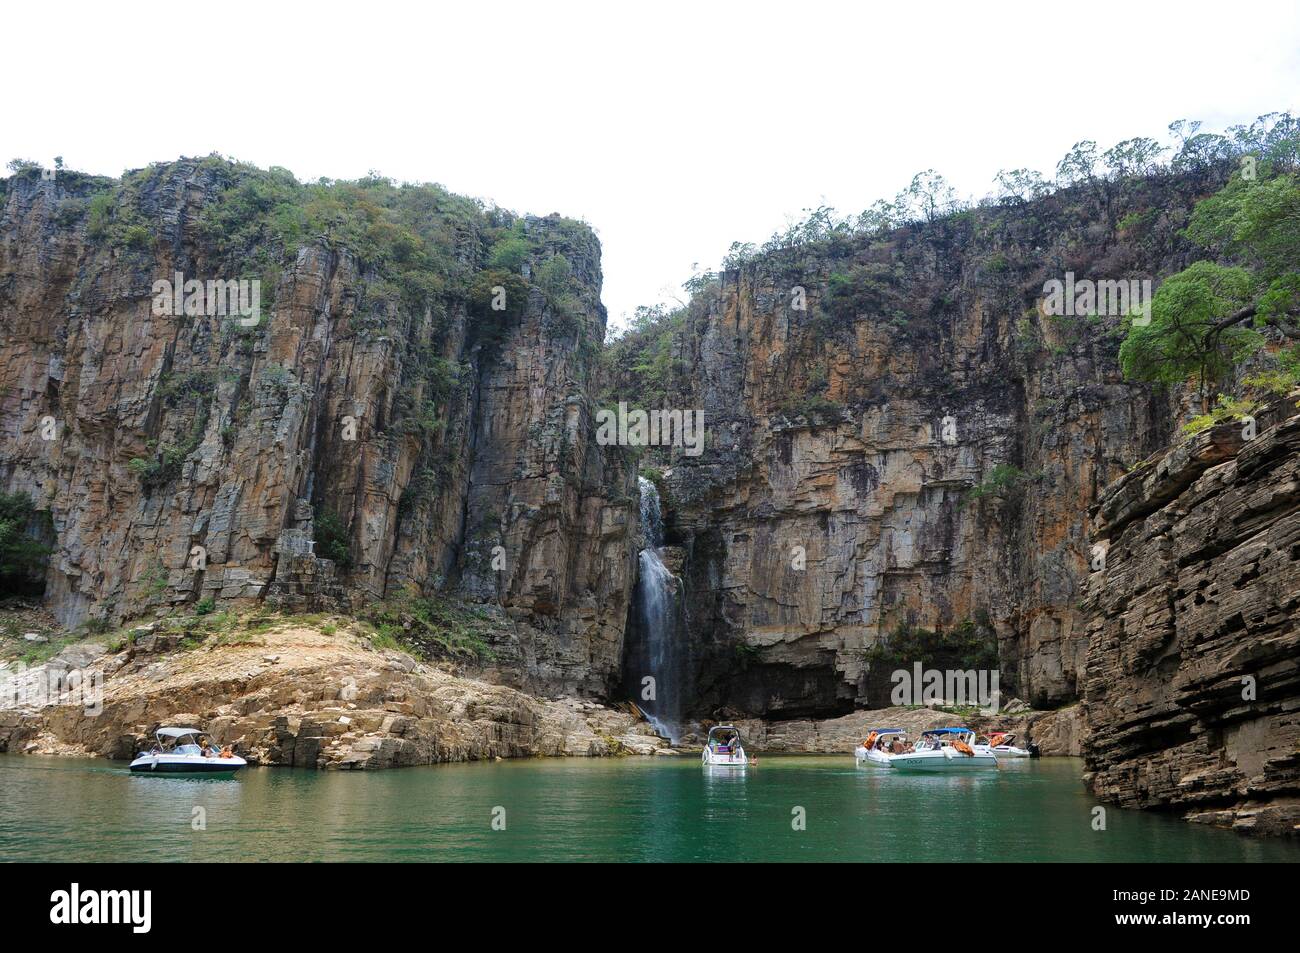 Capitol, Minas Gerais, Brasilien, 26. November 2019. Canyons Waterfall in Capitolio im Bundesstaat Minas Gerais. Stockfoto